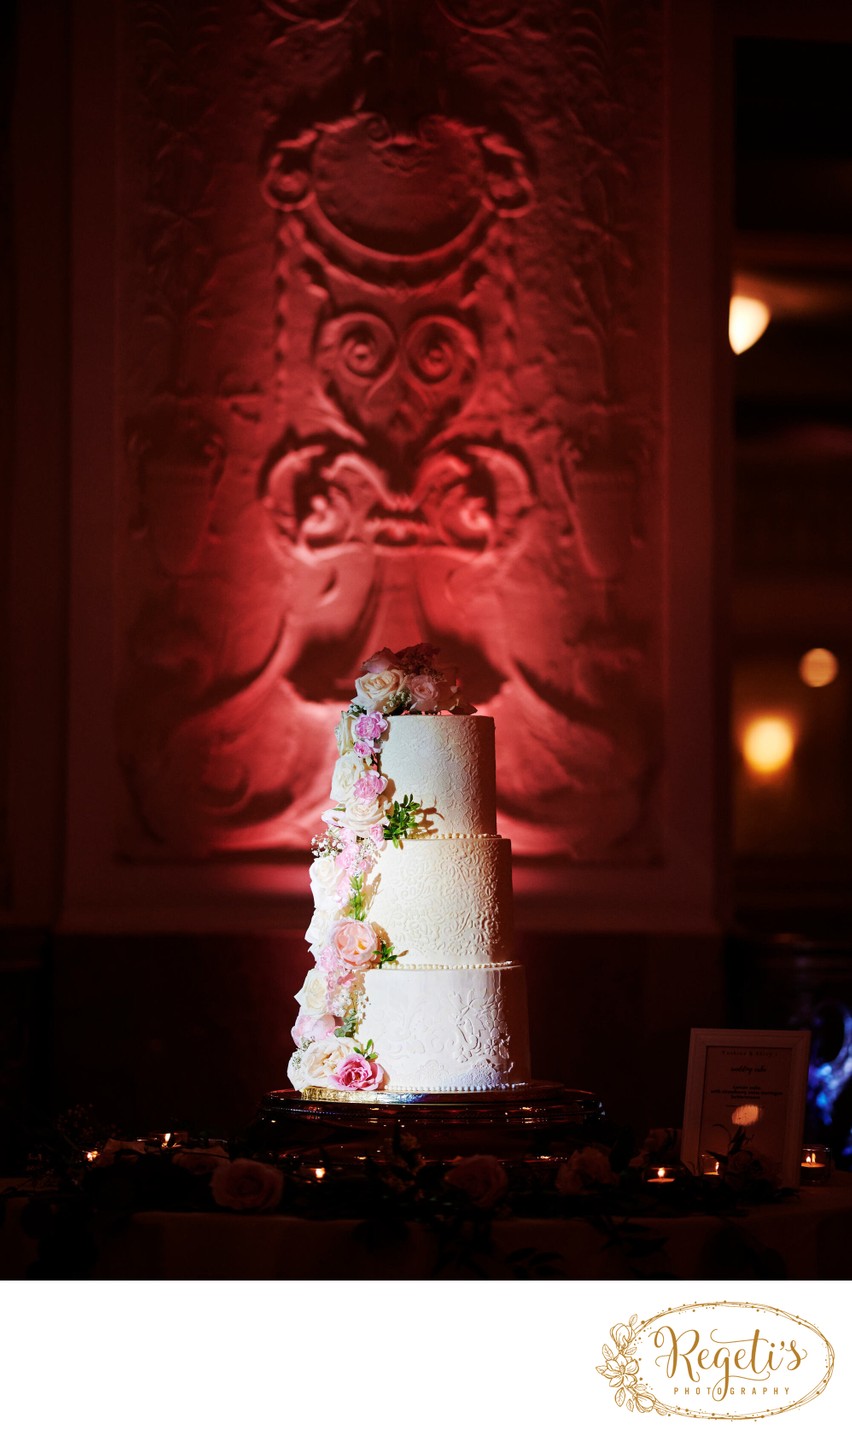 Wedding Cake at the Indian Wedding Reception